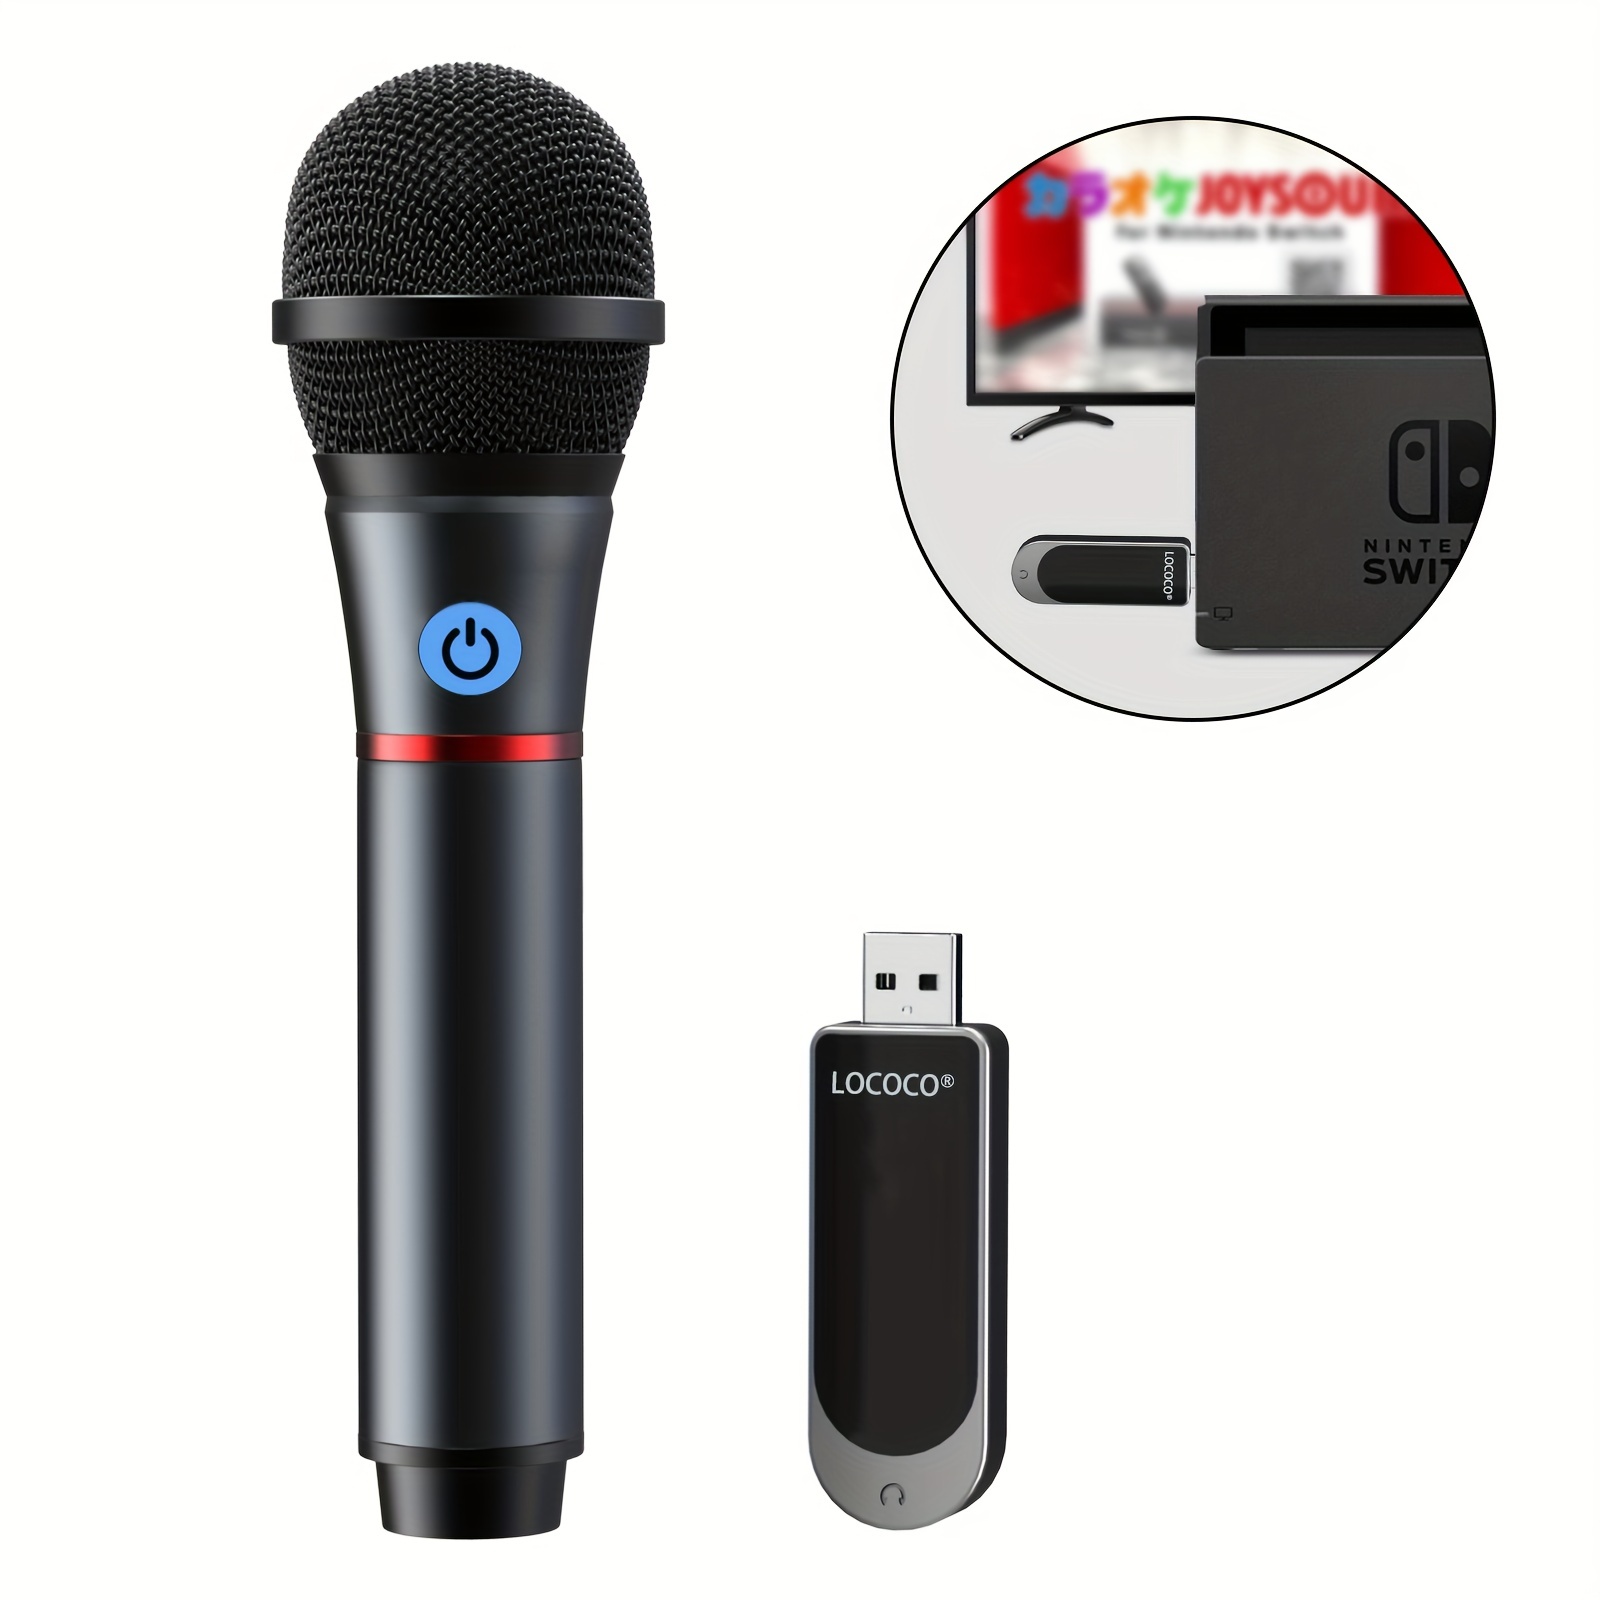 Karaoke Microphone for Nintendo Switch for Windows, Nintendo Switch